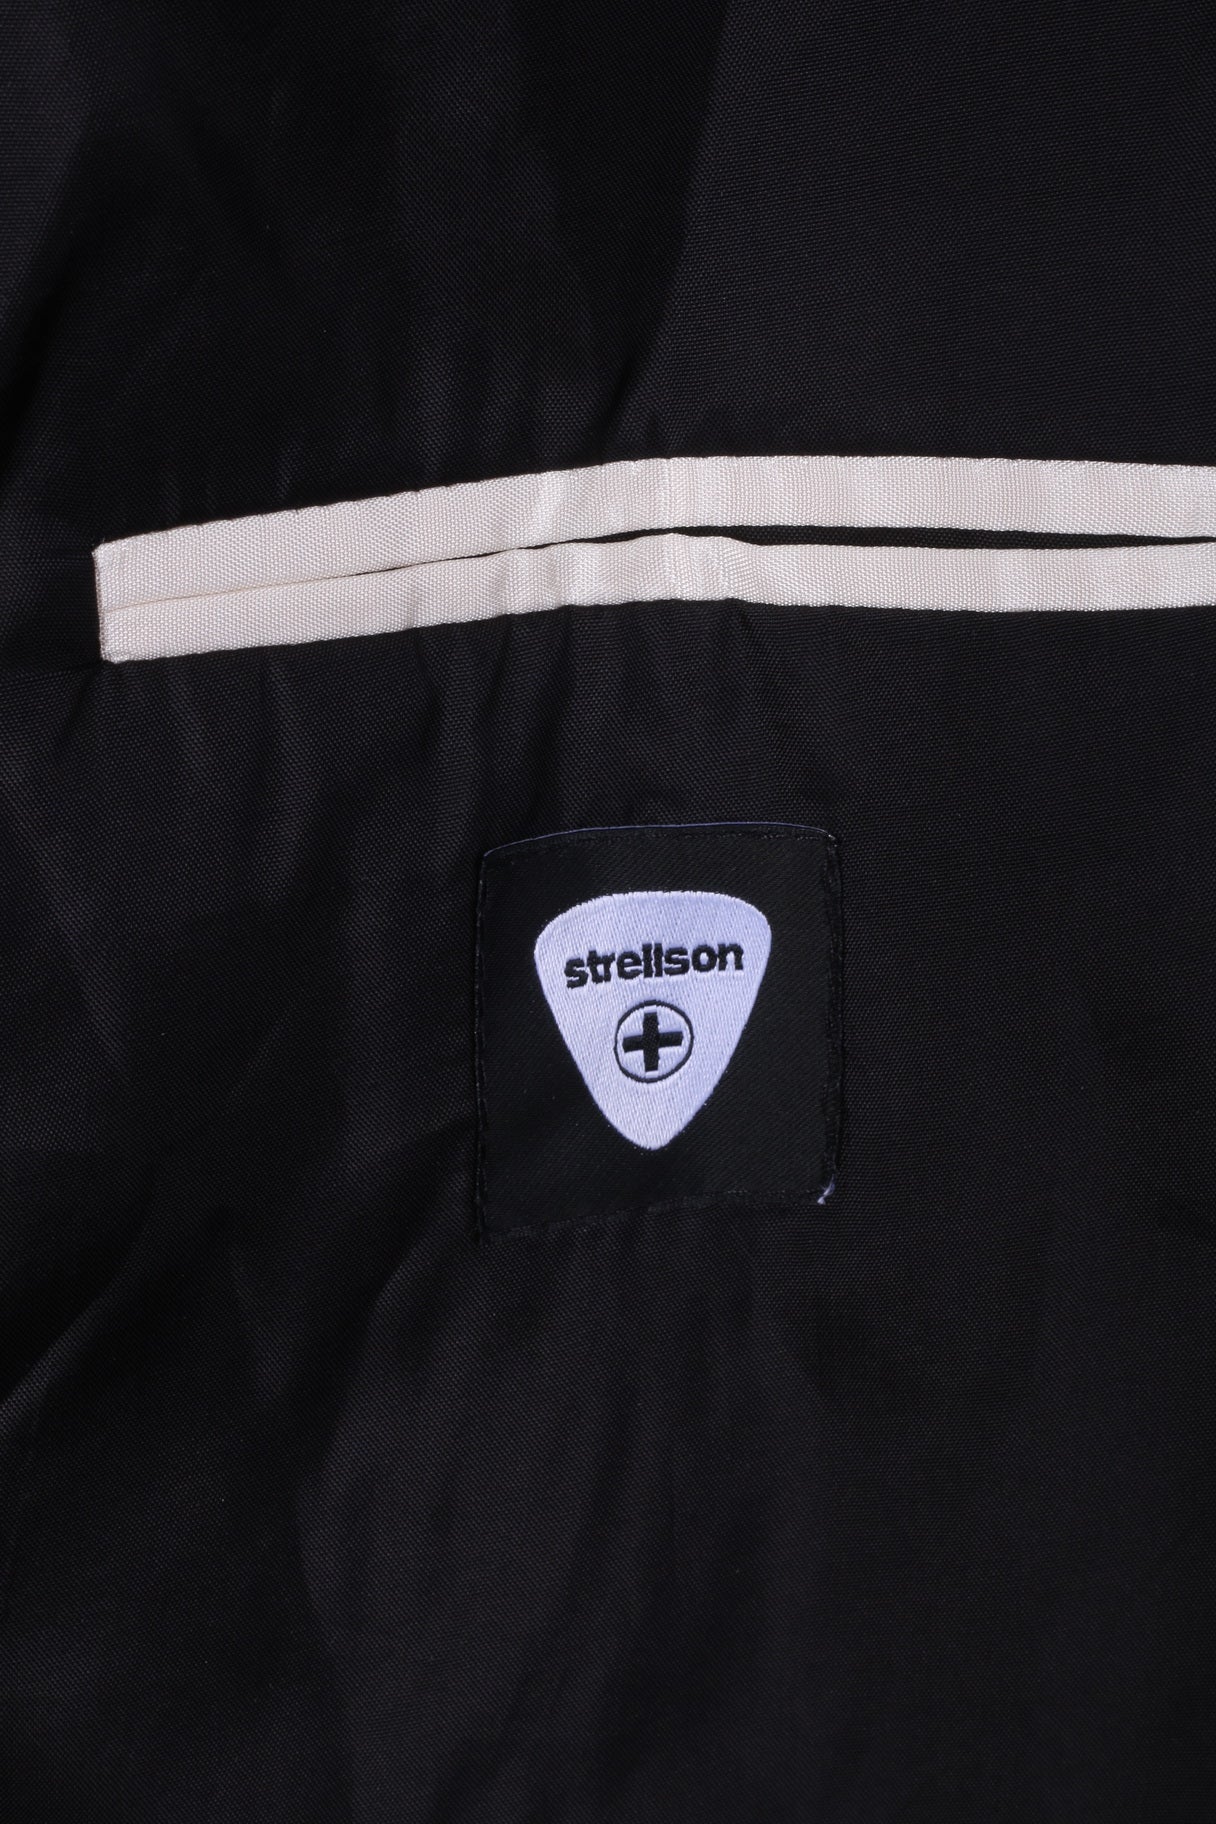 Strellson Men 94 36 S Blazer Grey Wool Rick James Premium Single Breasted Jacket